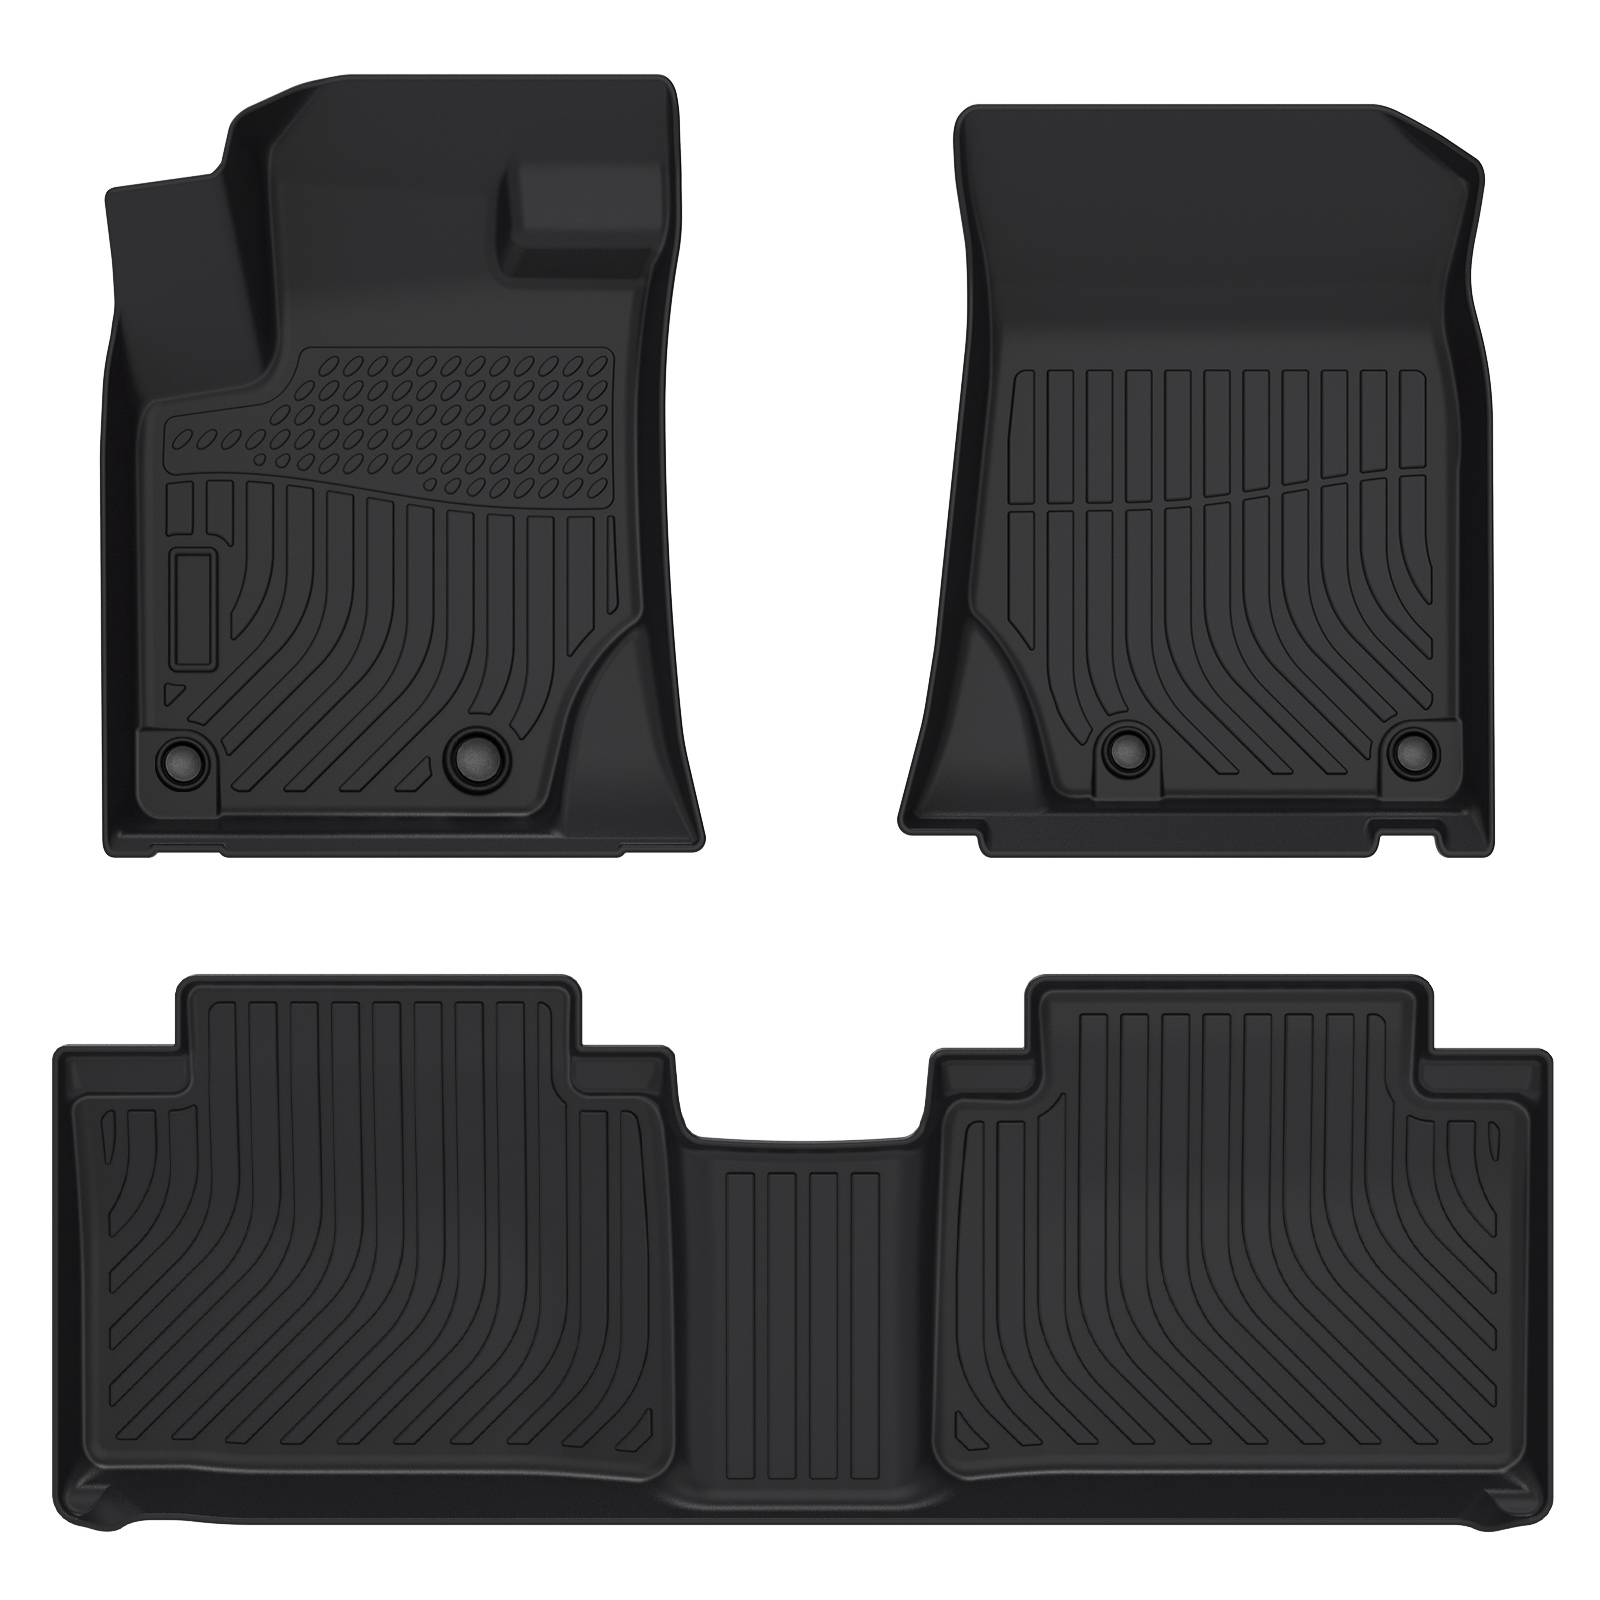 Geely Atlas Pro Full Cover 3D Car Floor Mat Tpe Waterproof Material Auto Floor Liners Interior Accessories